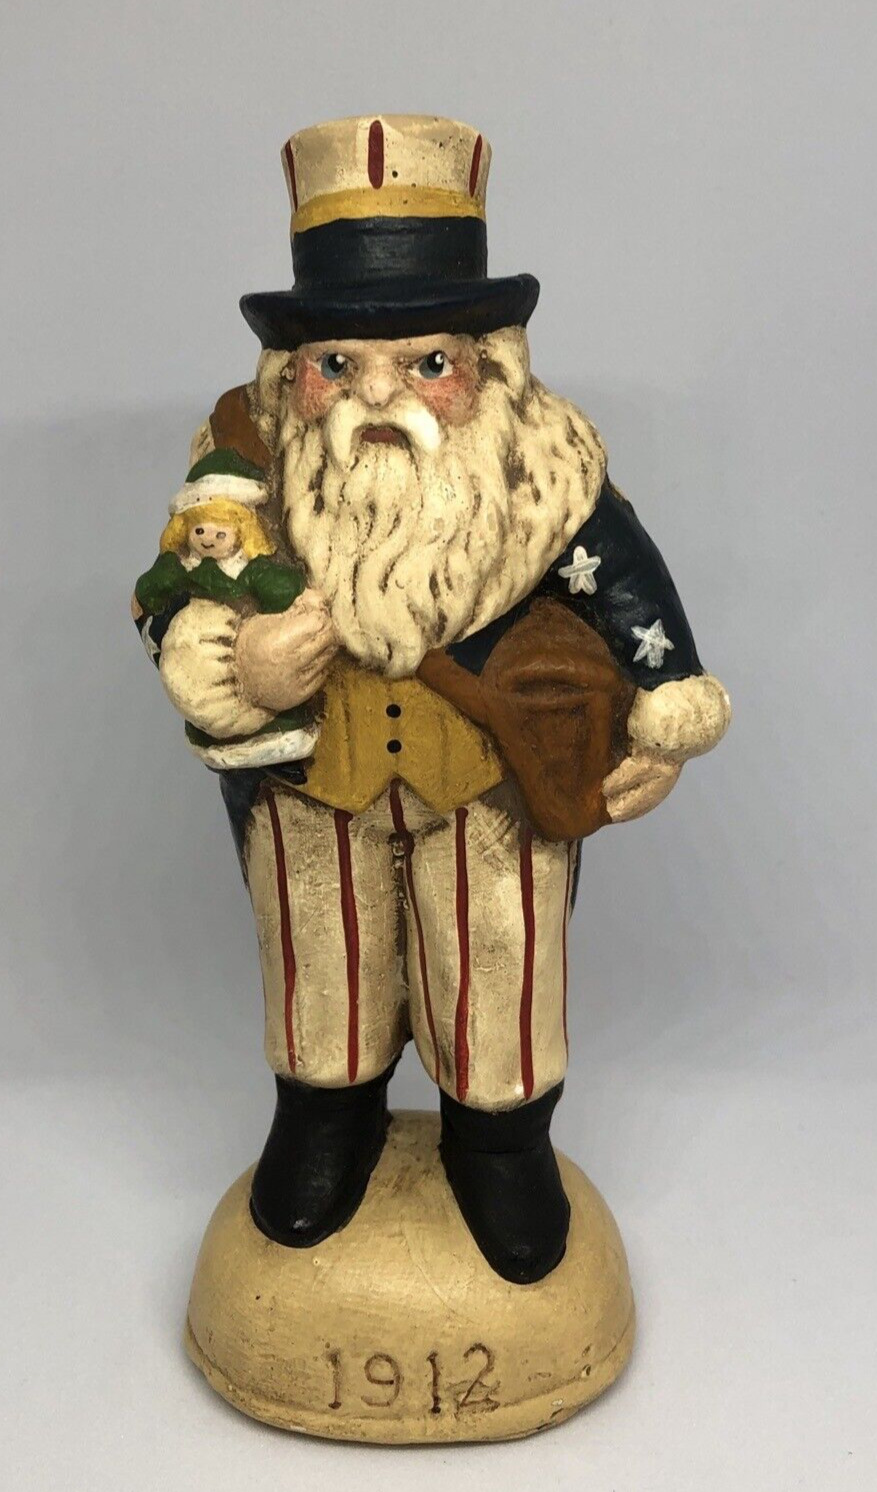 Walnut Ridge Primitives Chalkware Uncle Sam Santa Claus 1912 Christmas Figurine